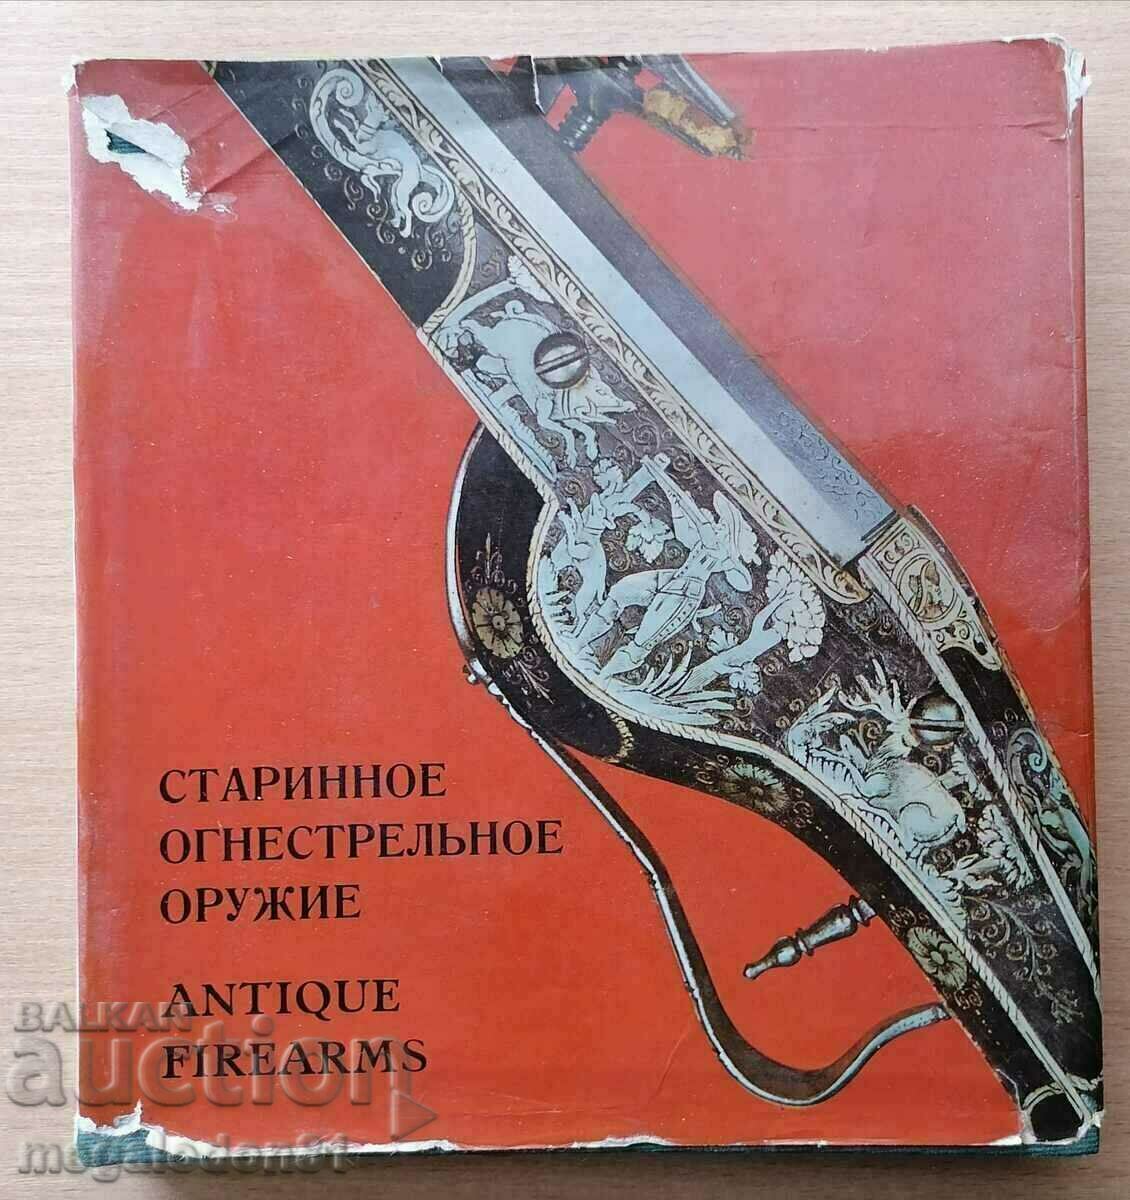 Antique firearms - photo album